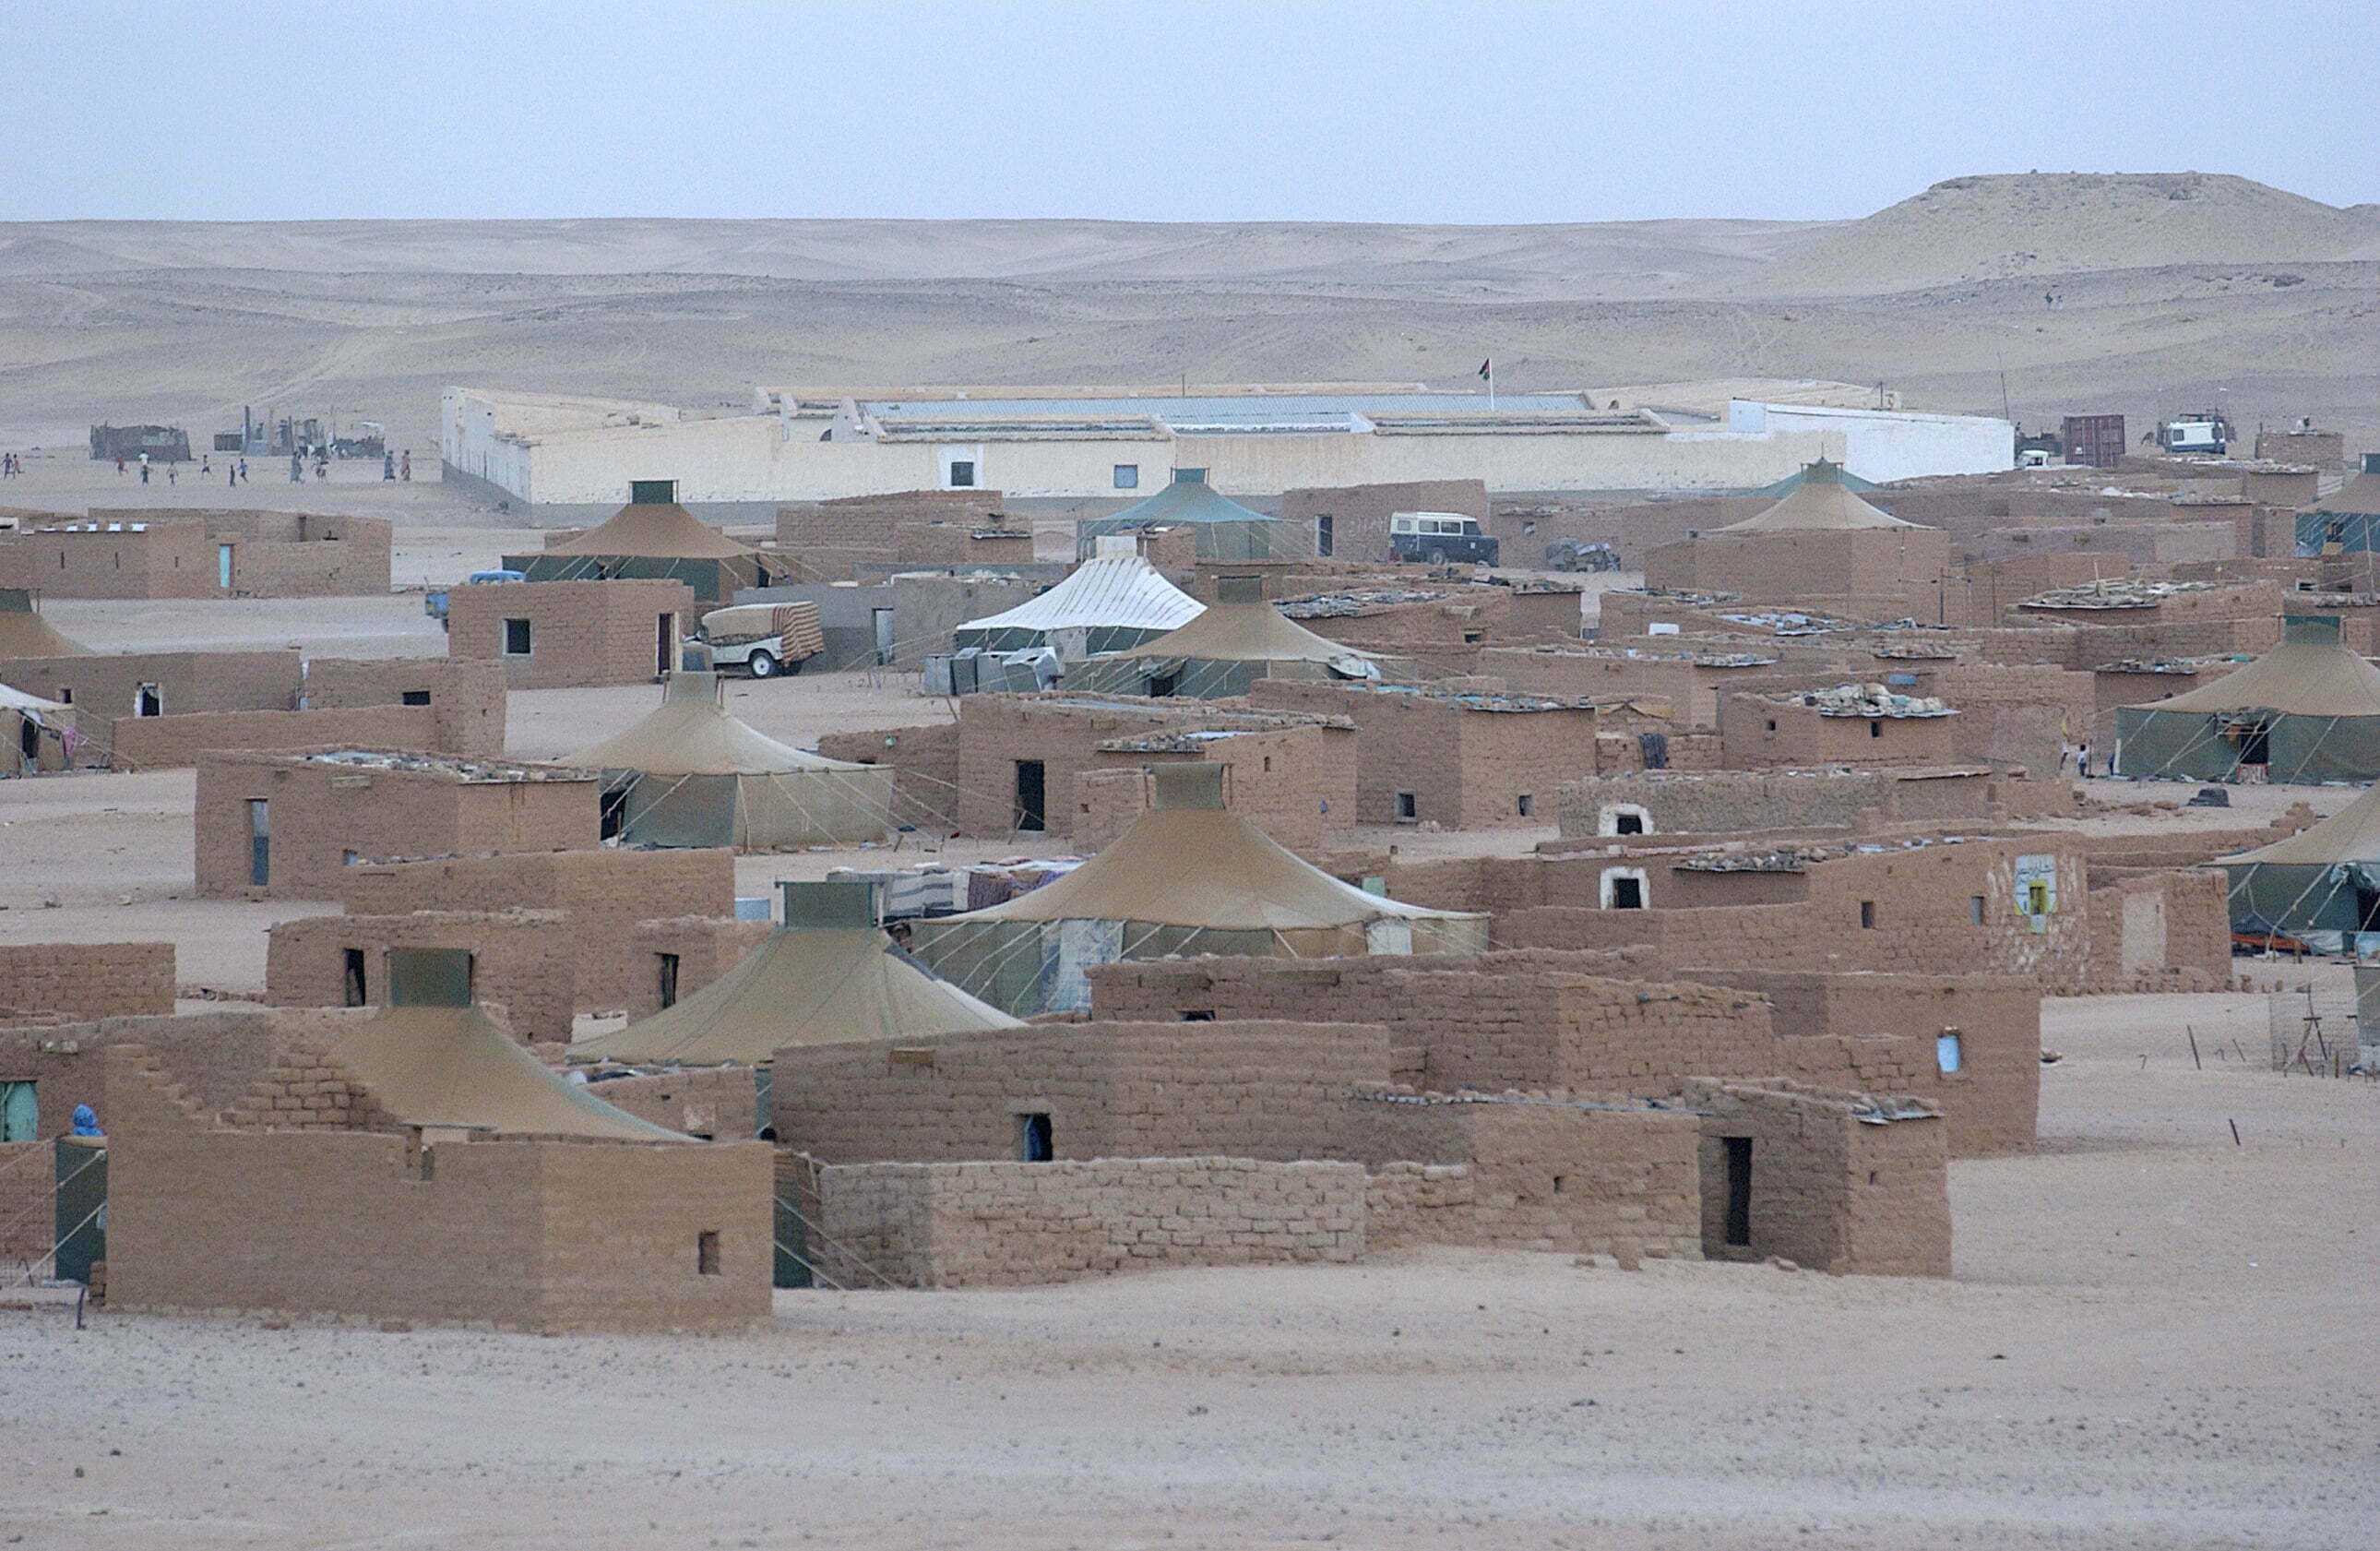 Landscape of Western Sahara